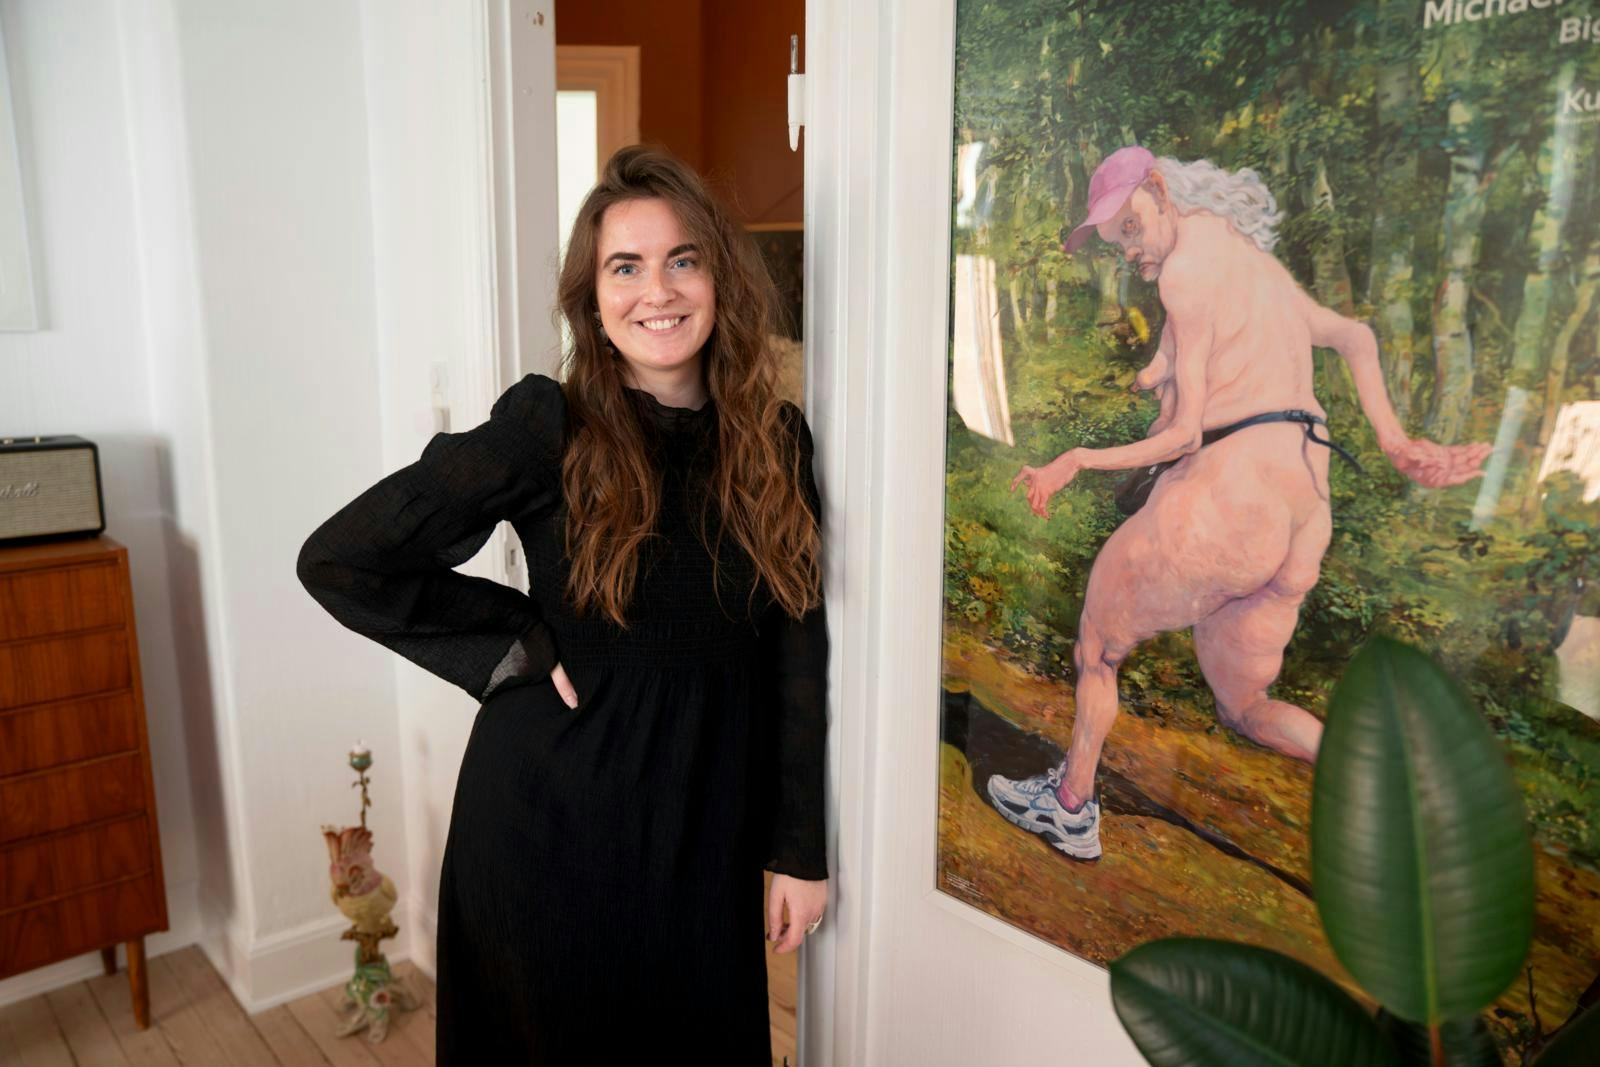 28-årige Terese Sau Hansens store helt er billedkunstneren Michael Kvium, som står bag dette mesterværk.